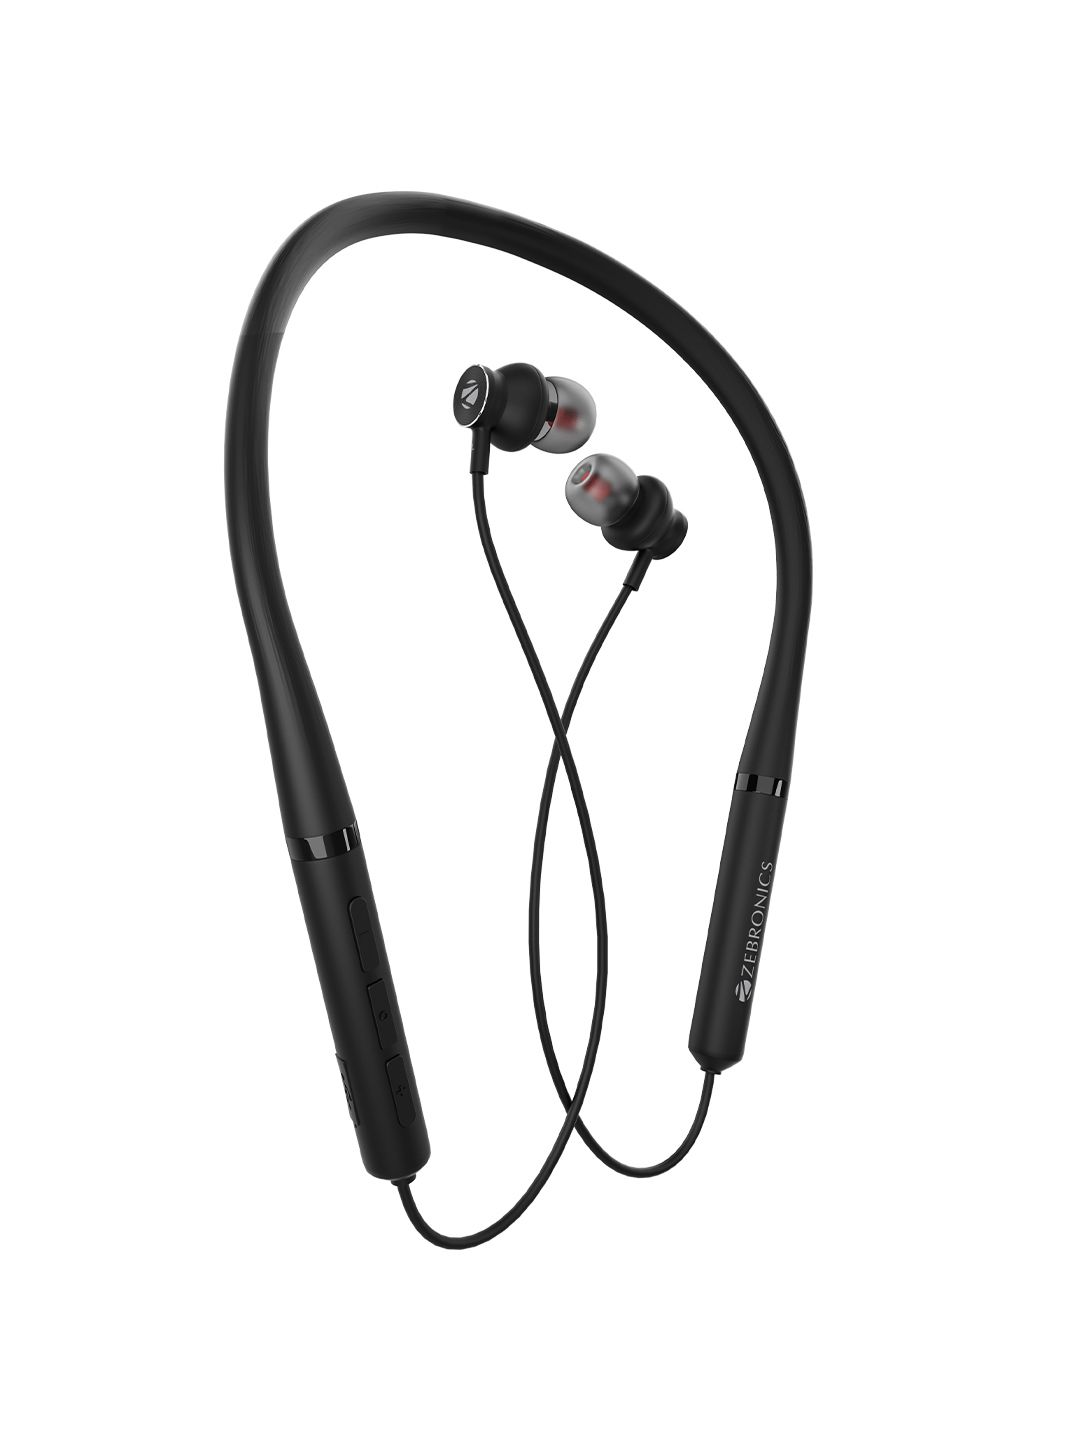 ZEBRONICS Zeb-Yoga 90 Pro Wireless Bluetooth in Ear Neckband Earphone with Mic - Black Price in India